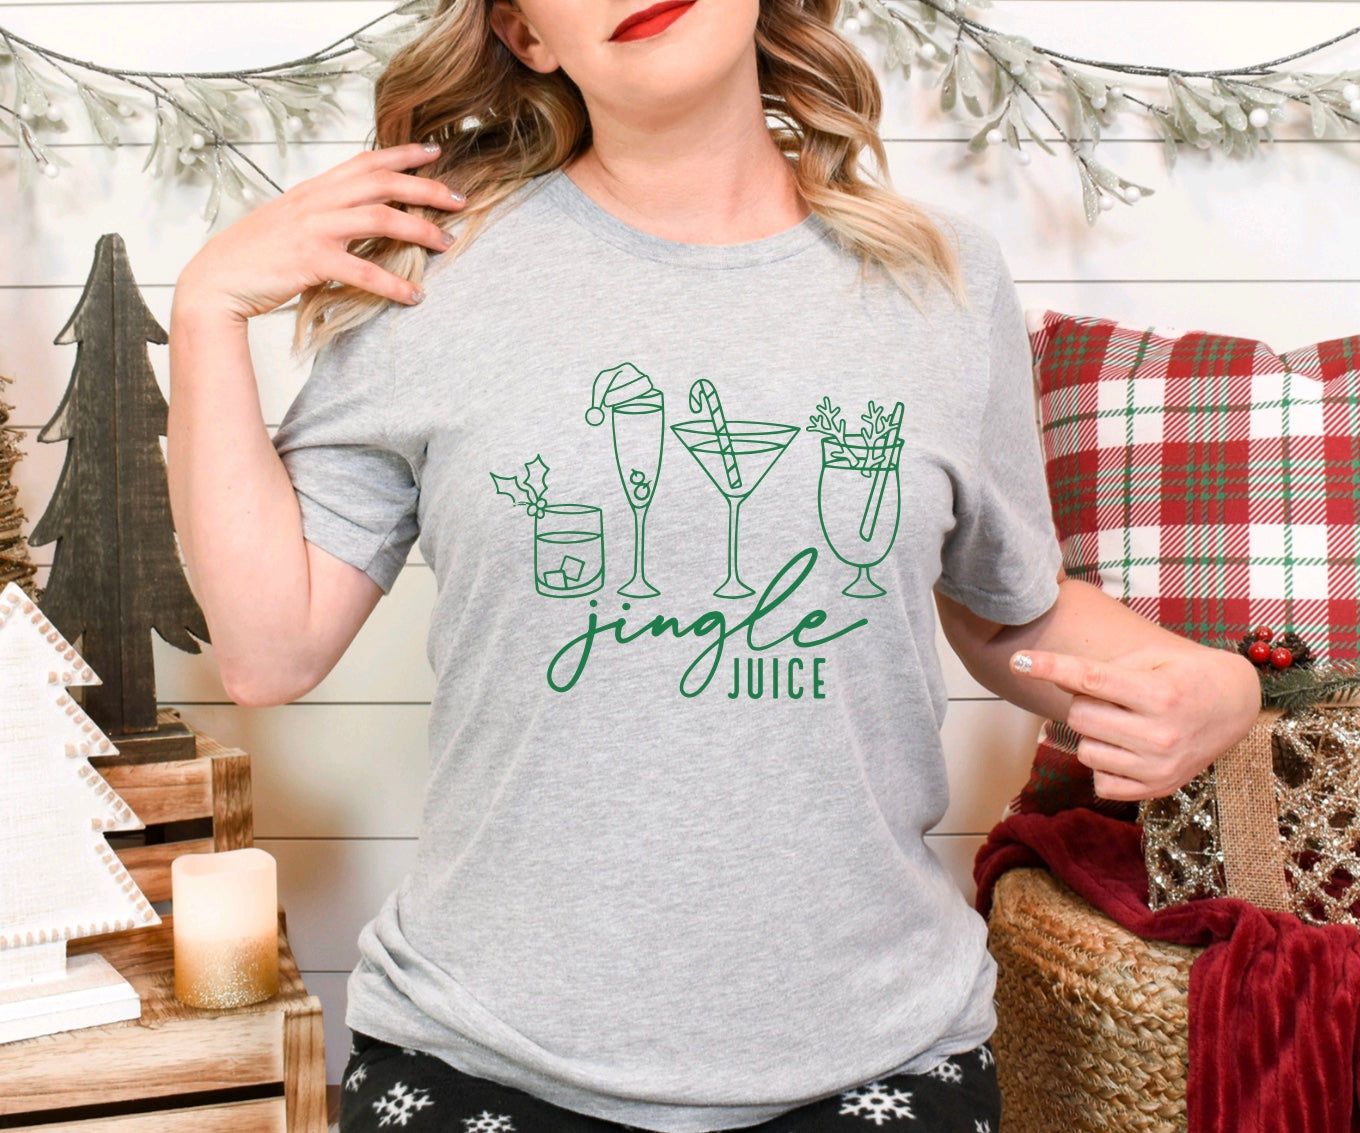 Jingle Juice- unisex Christmas t-shirt for women